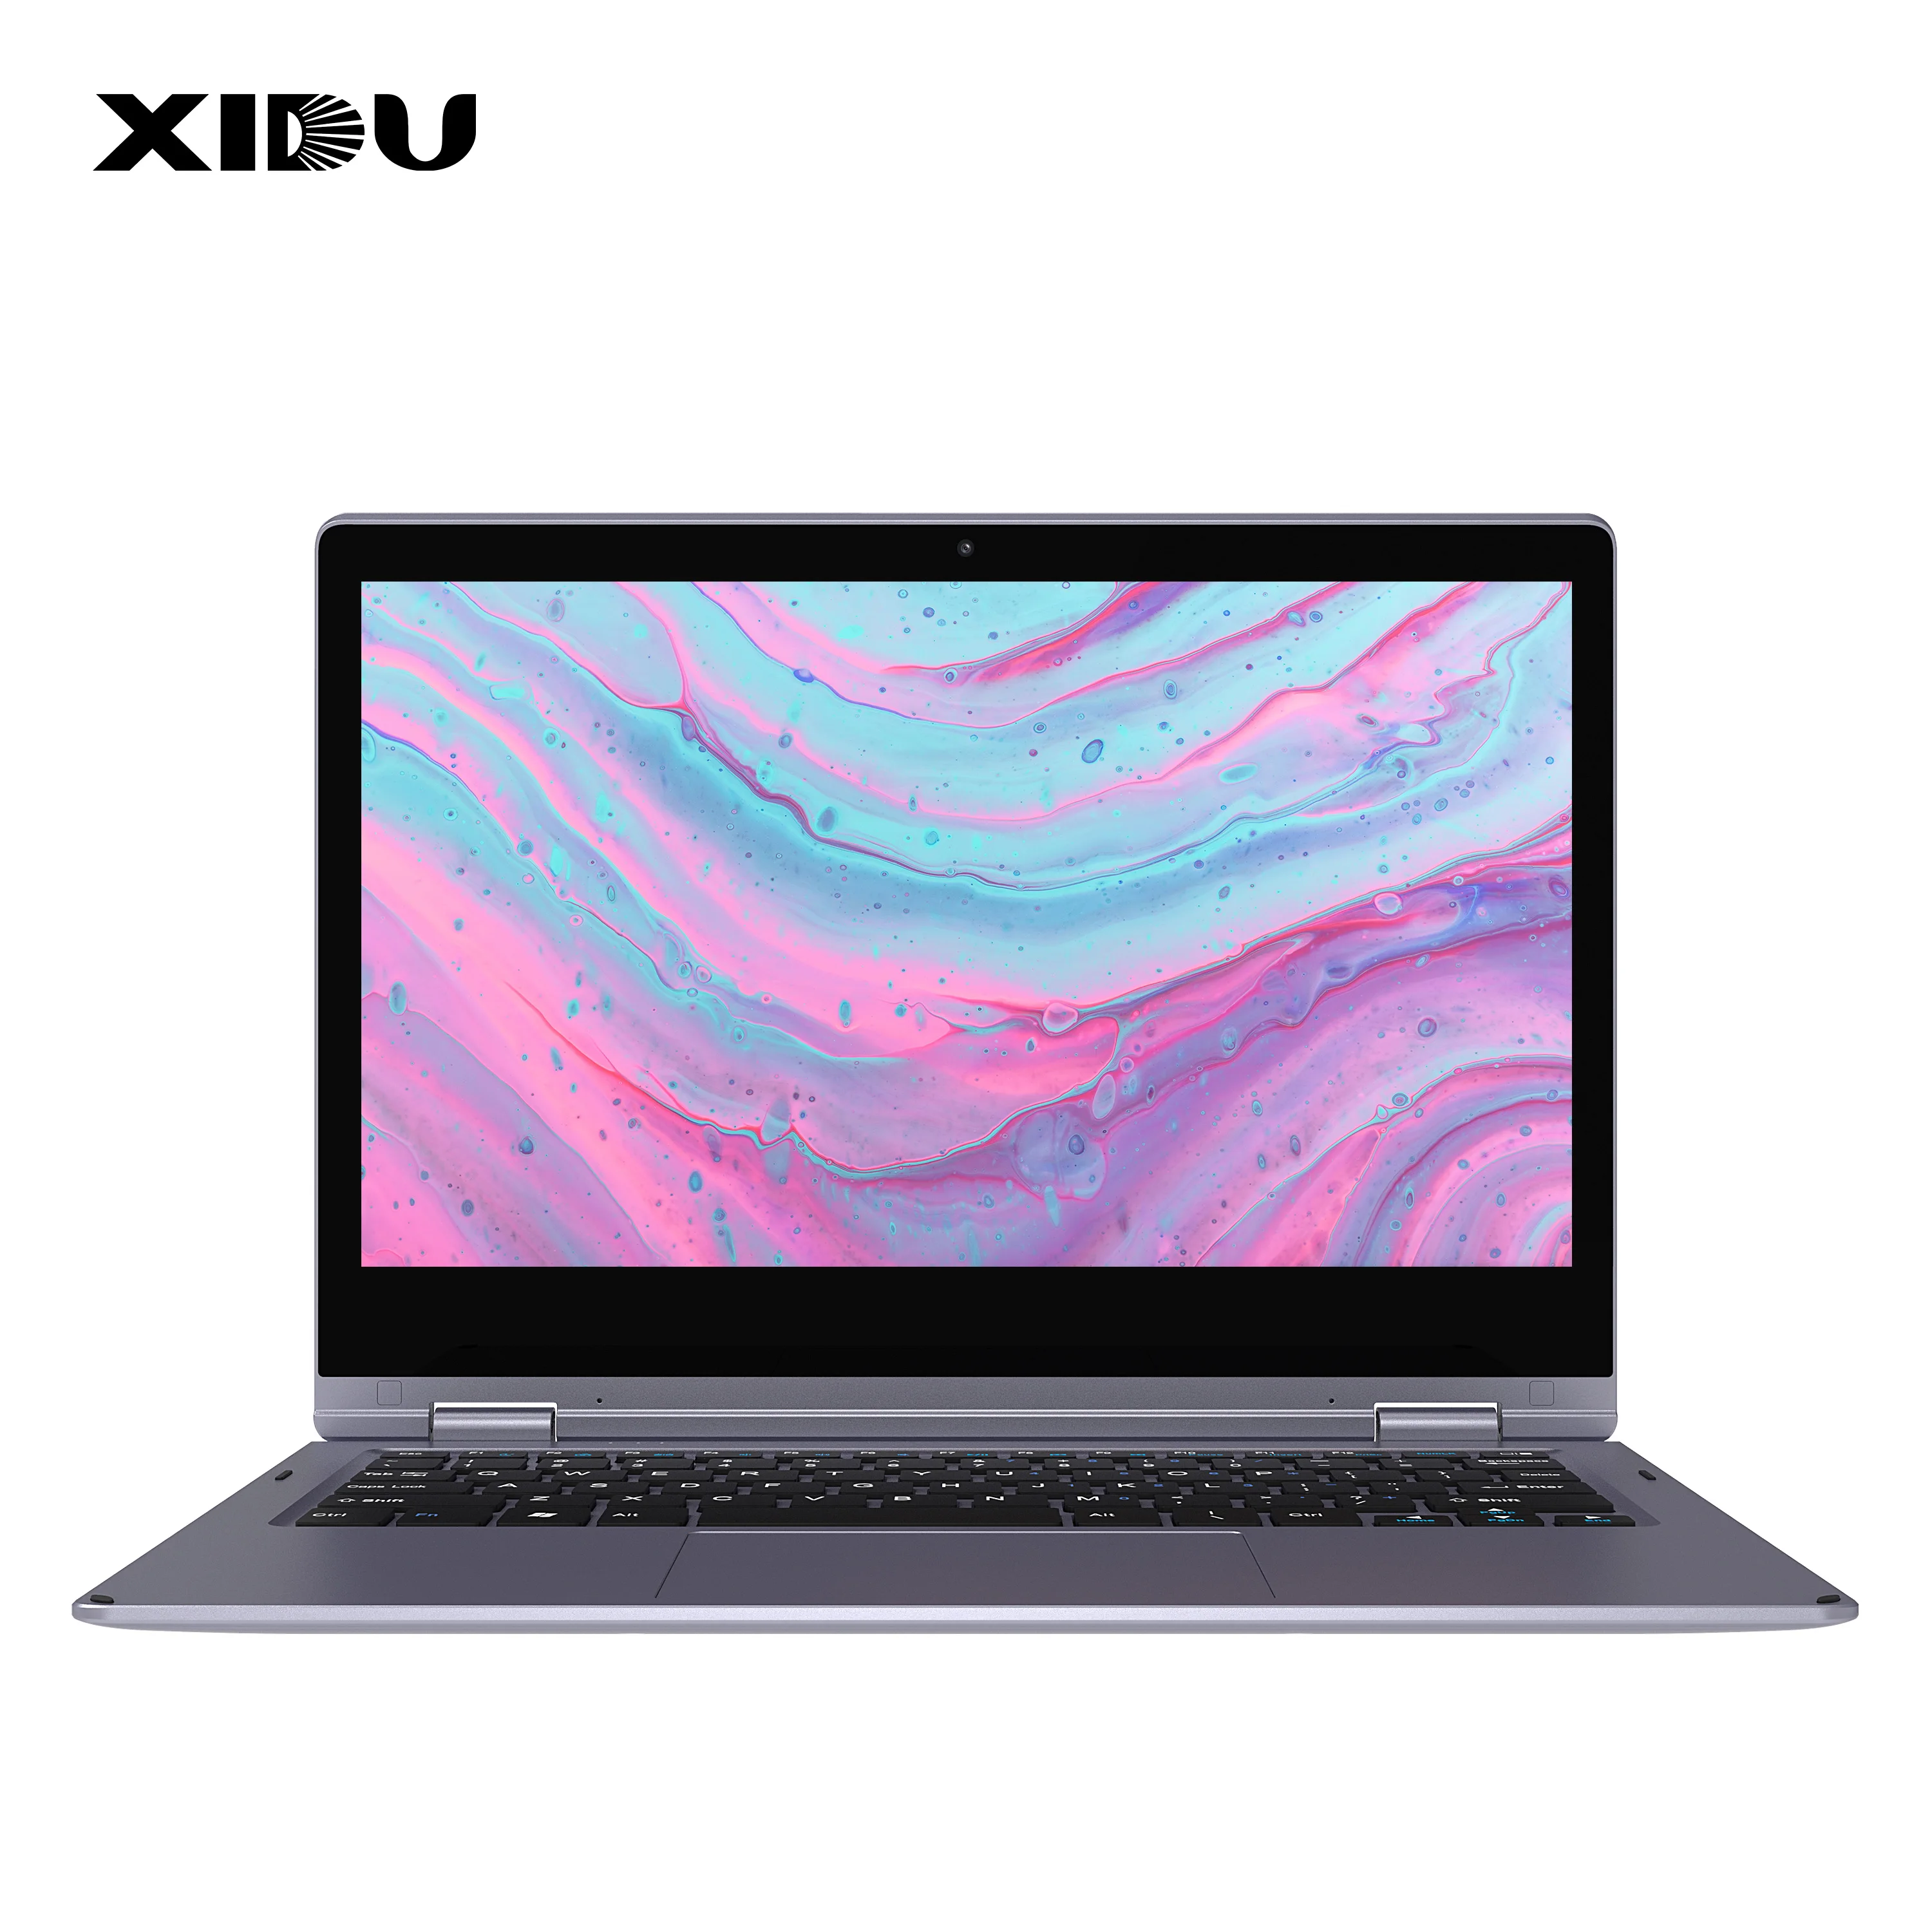 

XIDU 11.6 Inch 2560*1440 Touch screen 6GB+128GB SSD Intel Dual Core 360 Degree Flip Cheap Student Mini Laptops, Silver, black, and customize